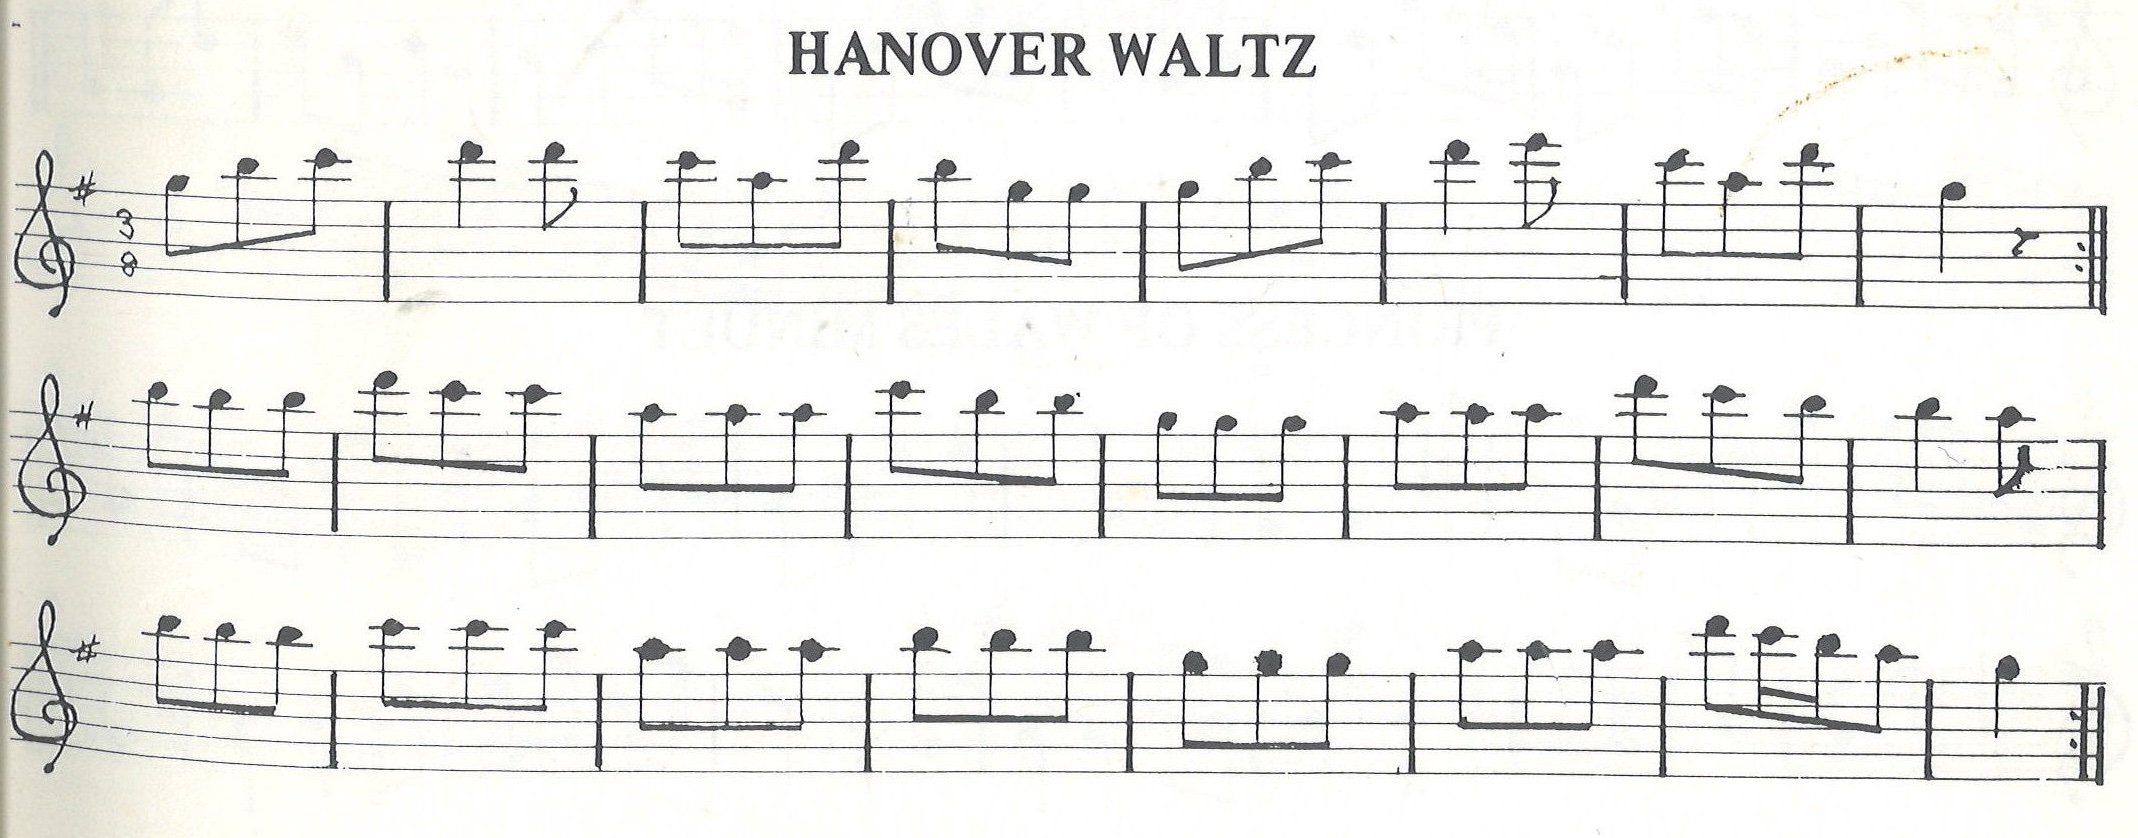 scanned sheet music for Hanover Waltz